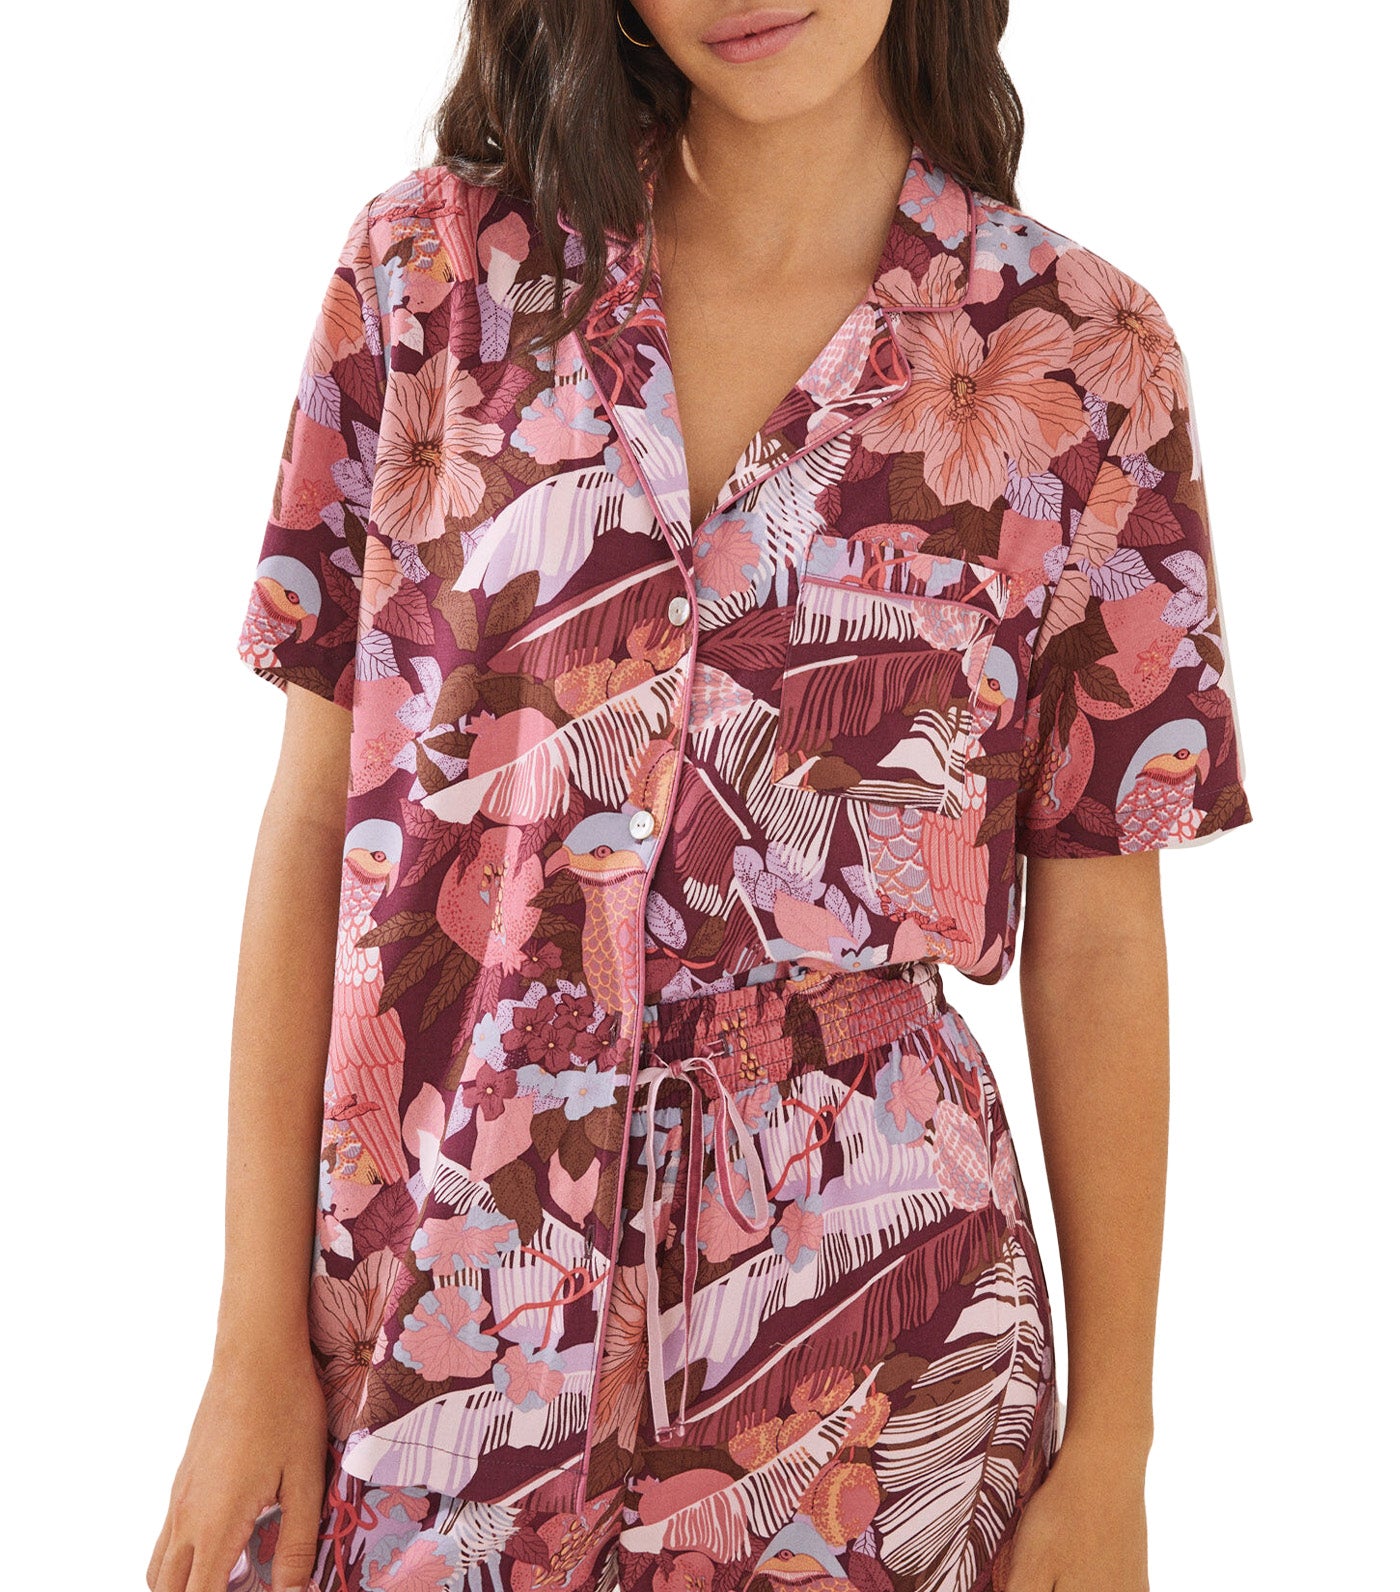 Classic Printed Capri Pajamas Set Pink